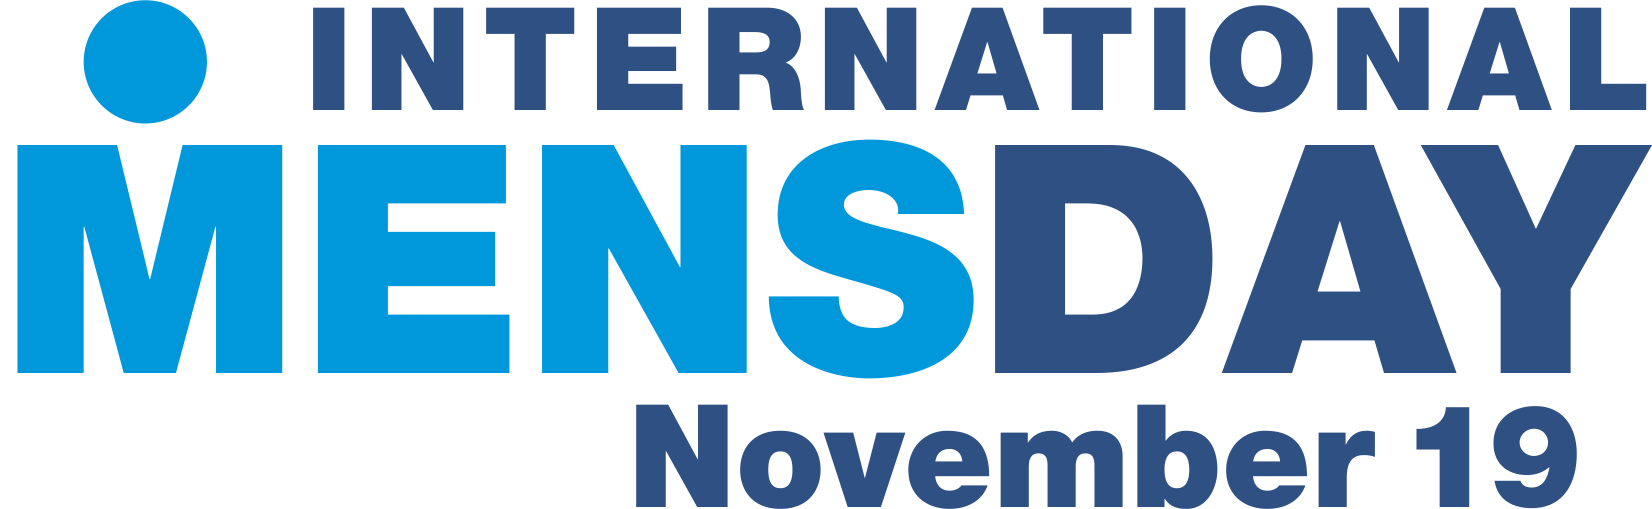 International Mens Day November 19 Header Image